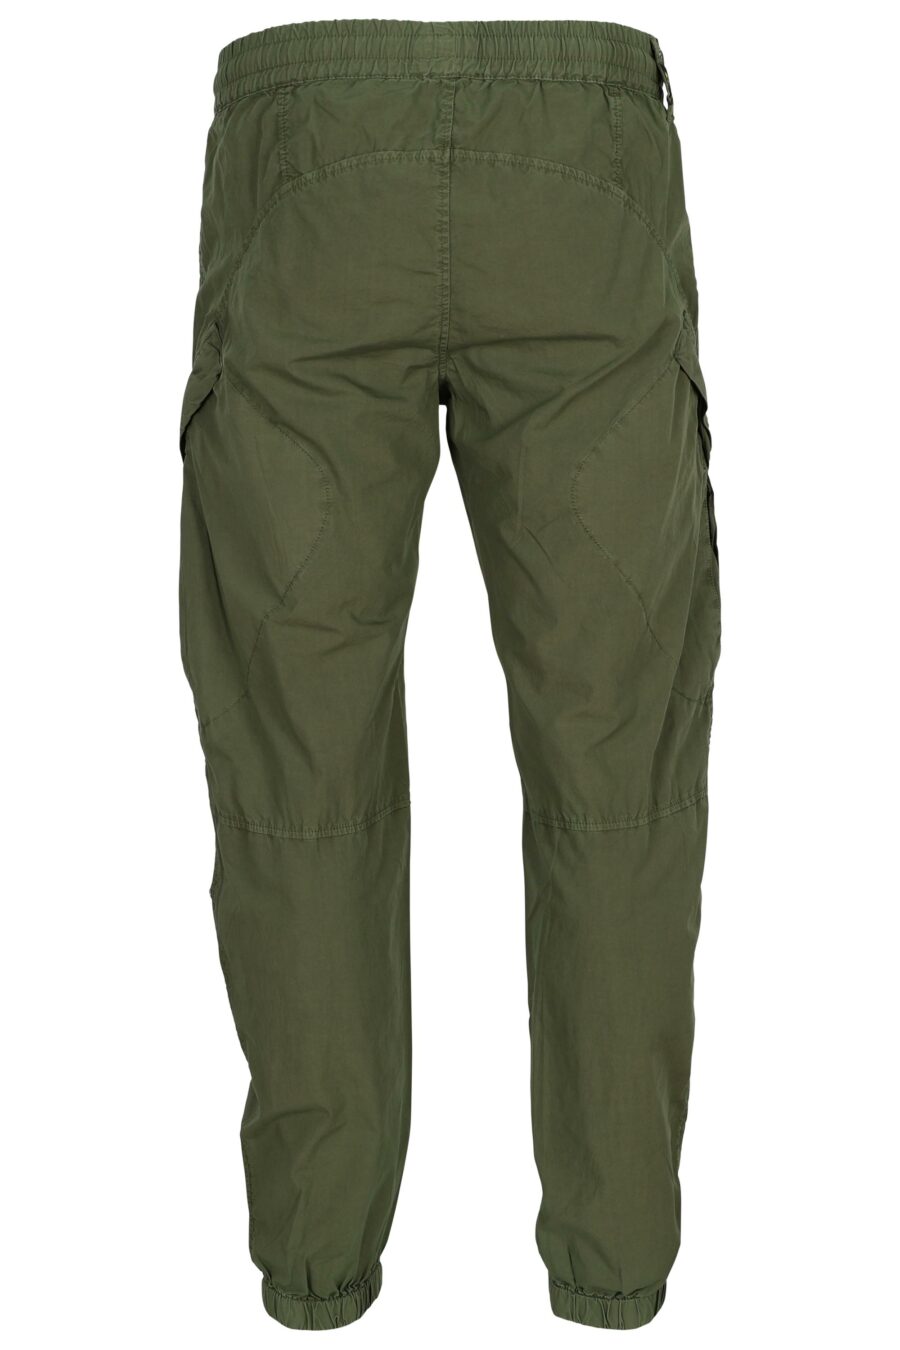 Pantalon cargo vert militaire avec ressort - 8058610767143 2